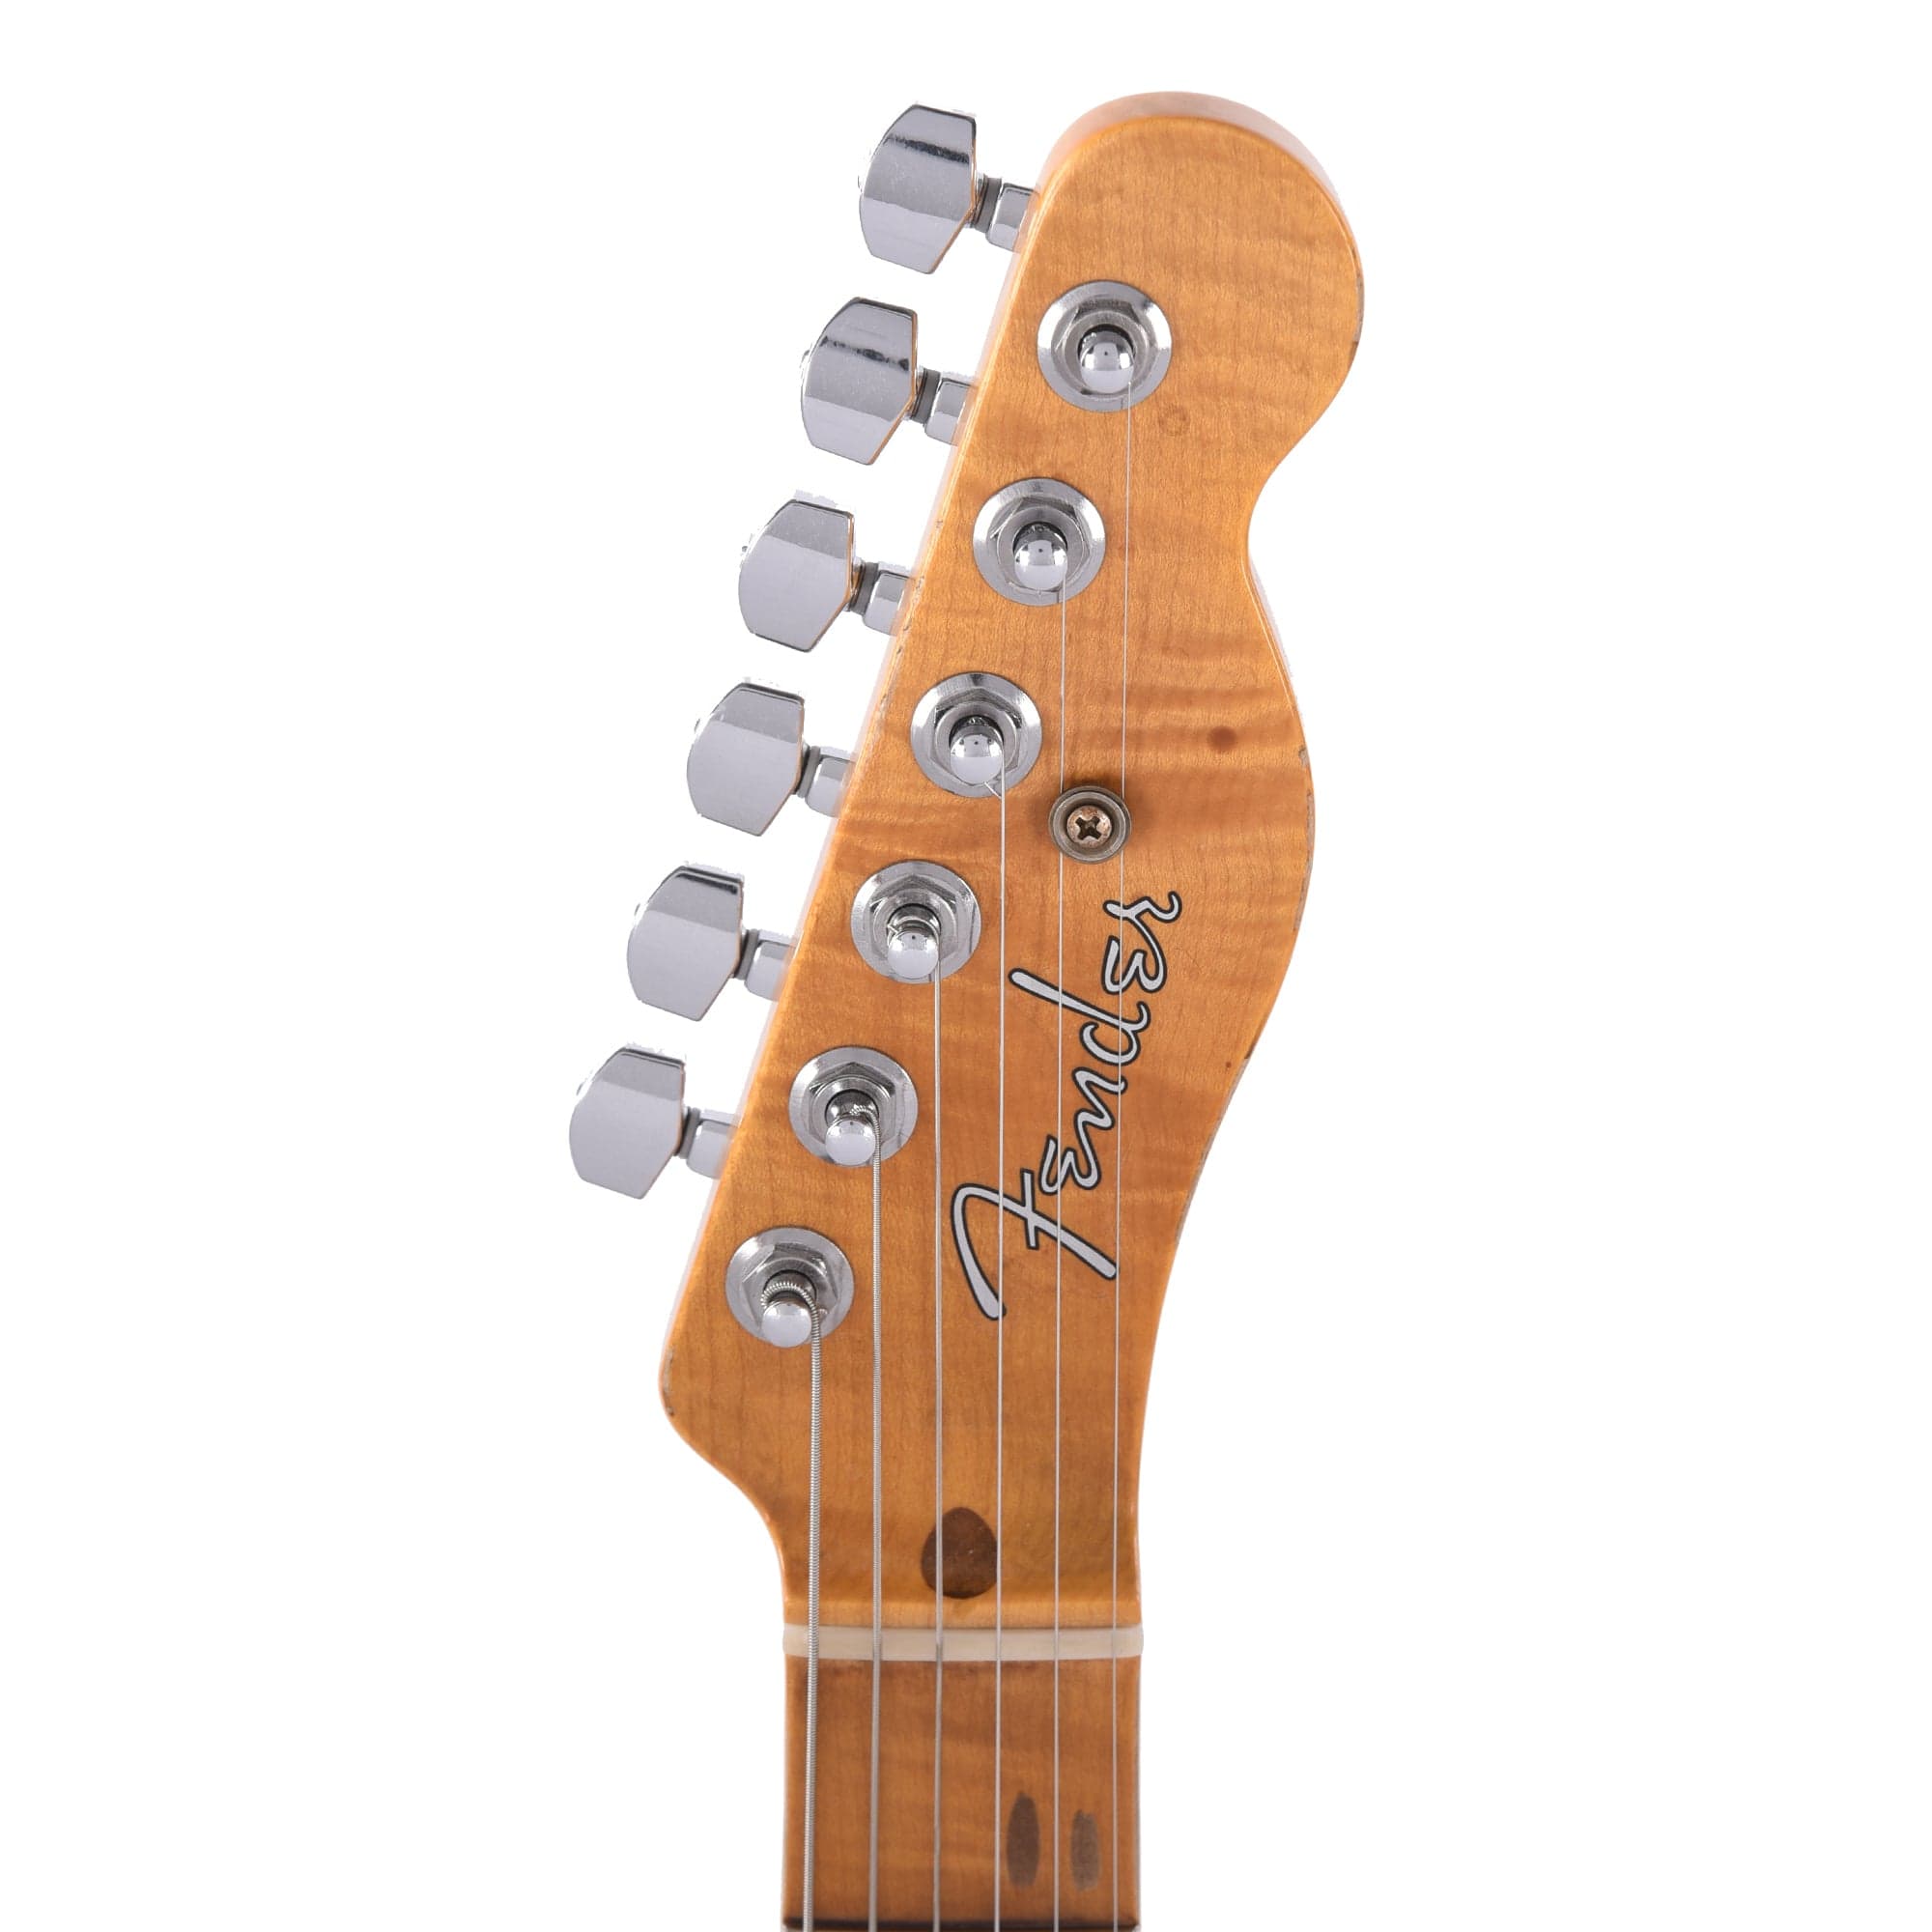 Fender Custom Shop Limited Edition Caballo Tono Ligero Relic Aged Gold Sparkle Electric Guitars / Semi-Hollow